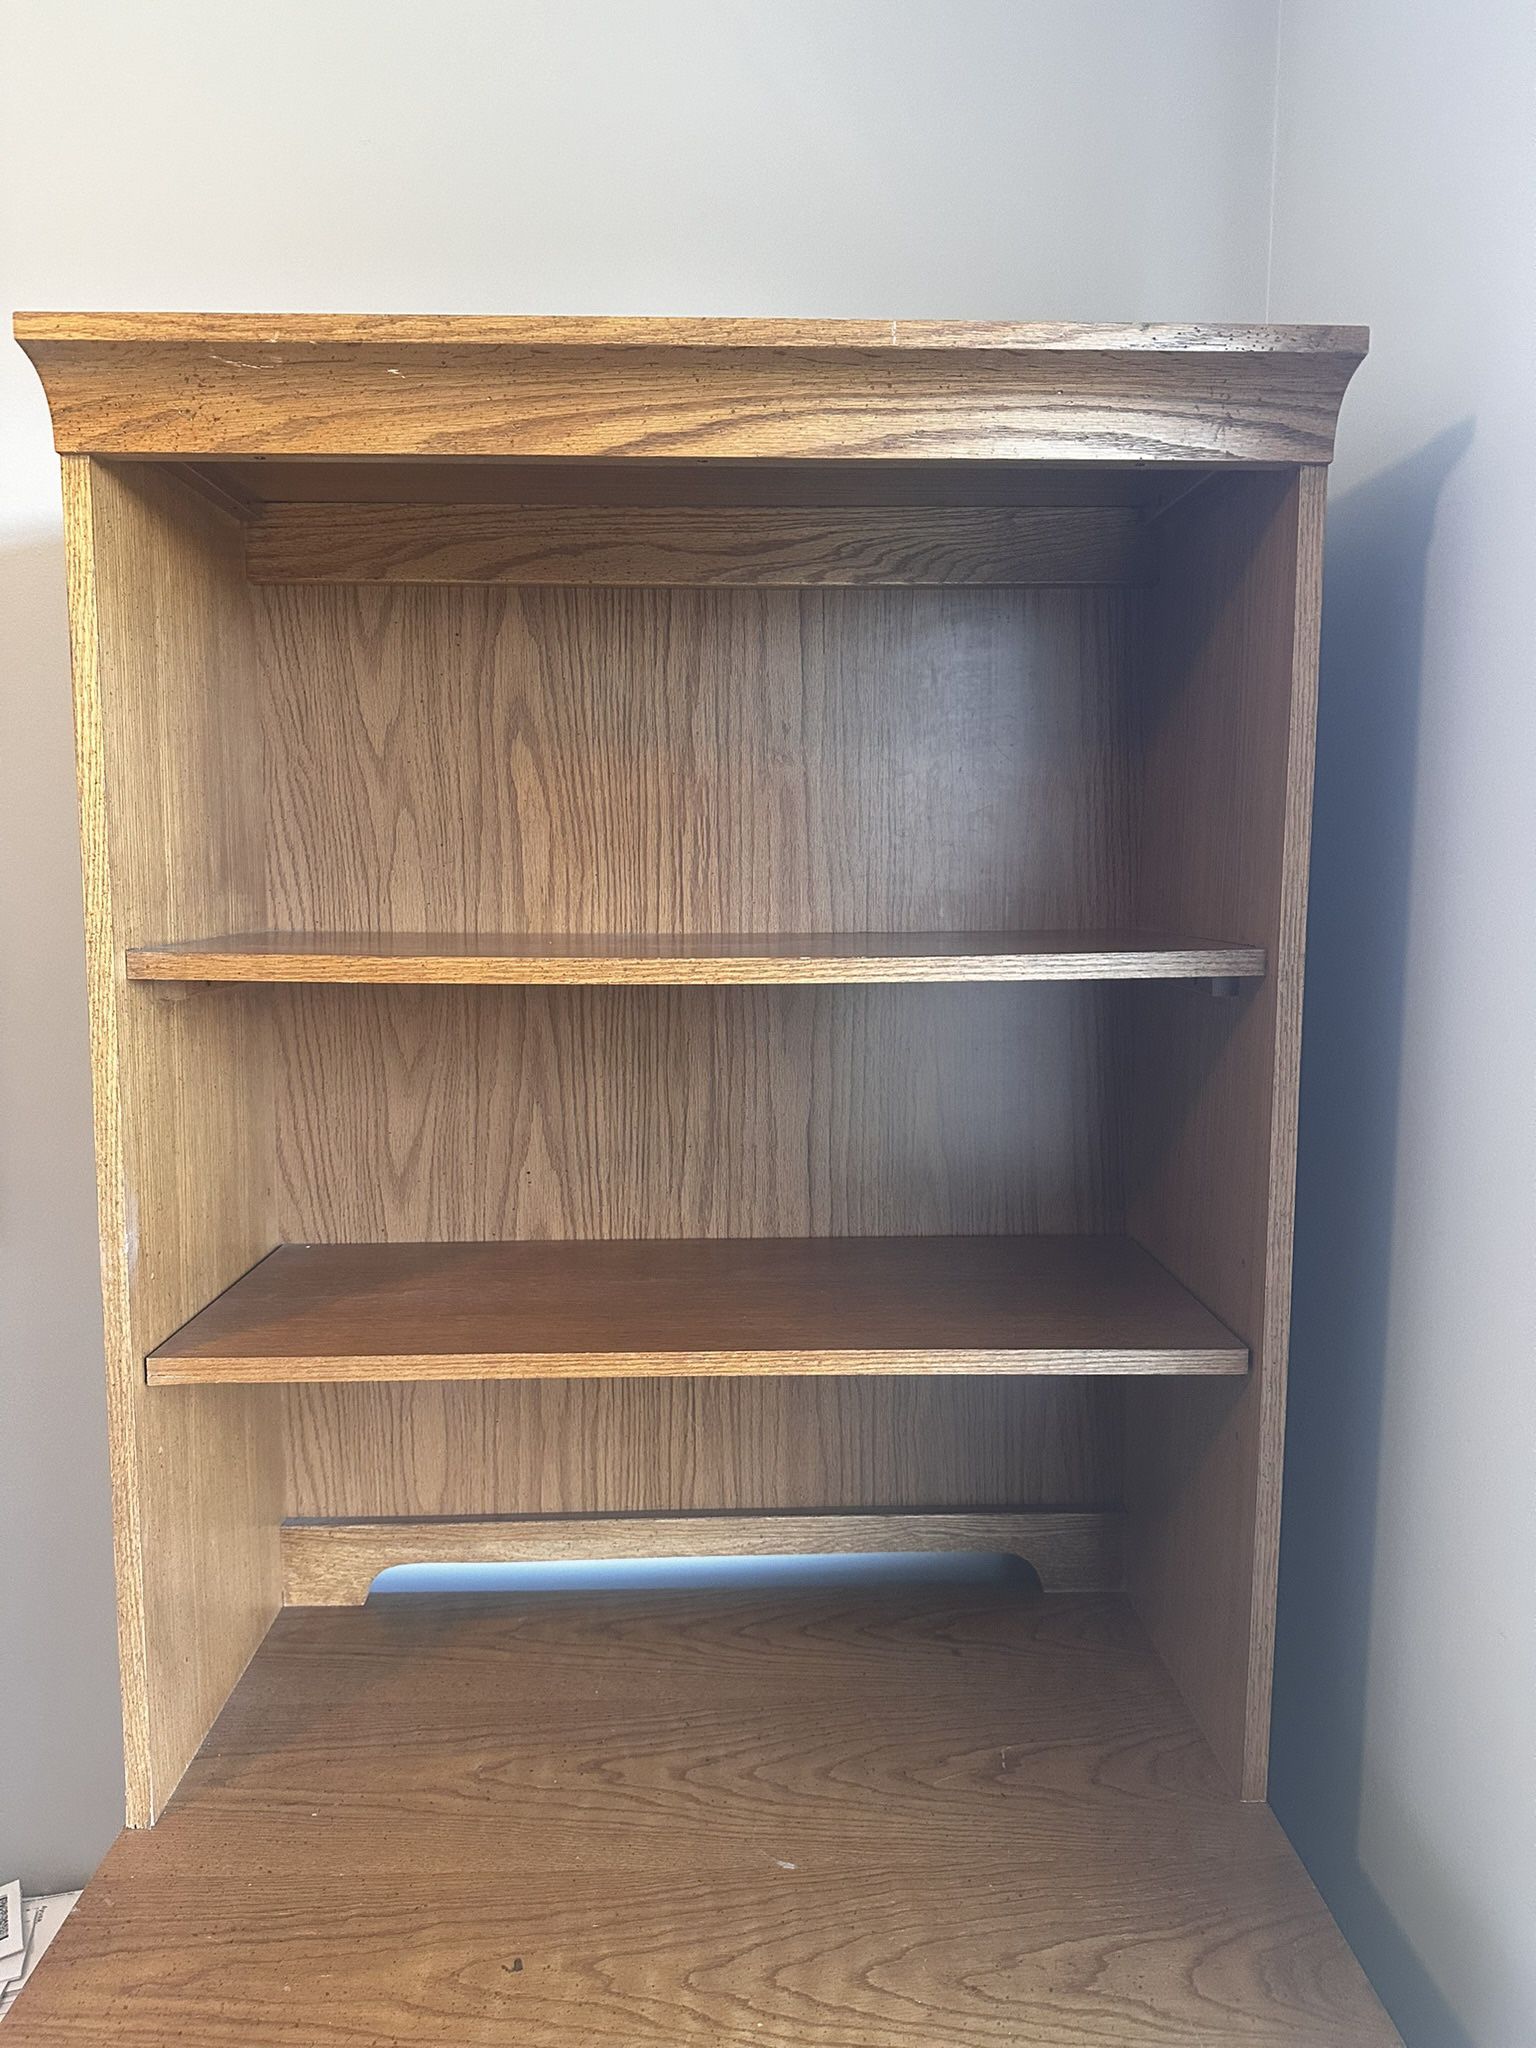 Stanley furniture Custom Bookshelf Cabinet